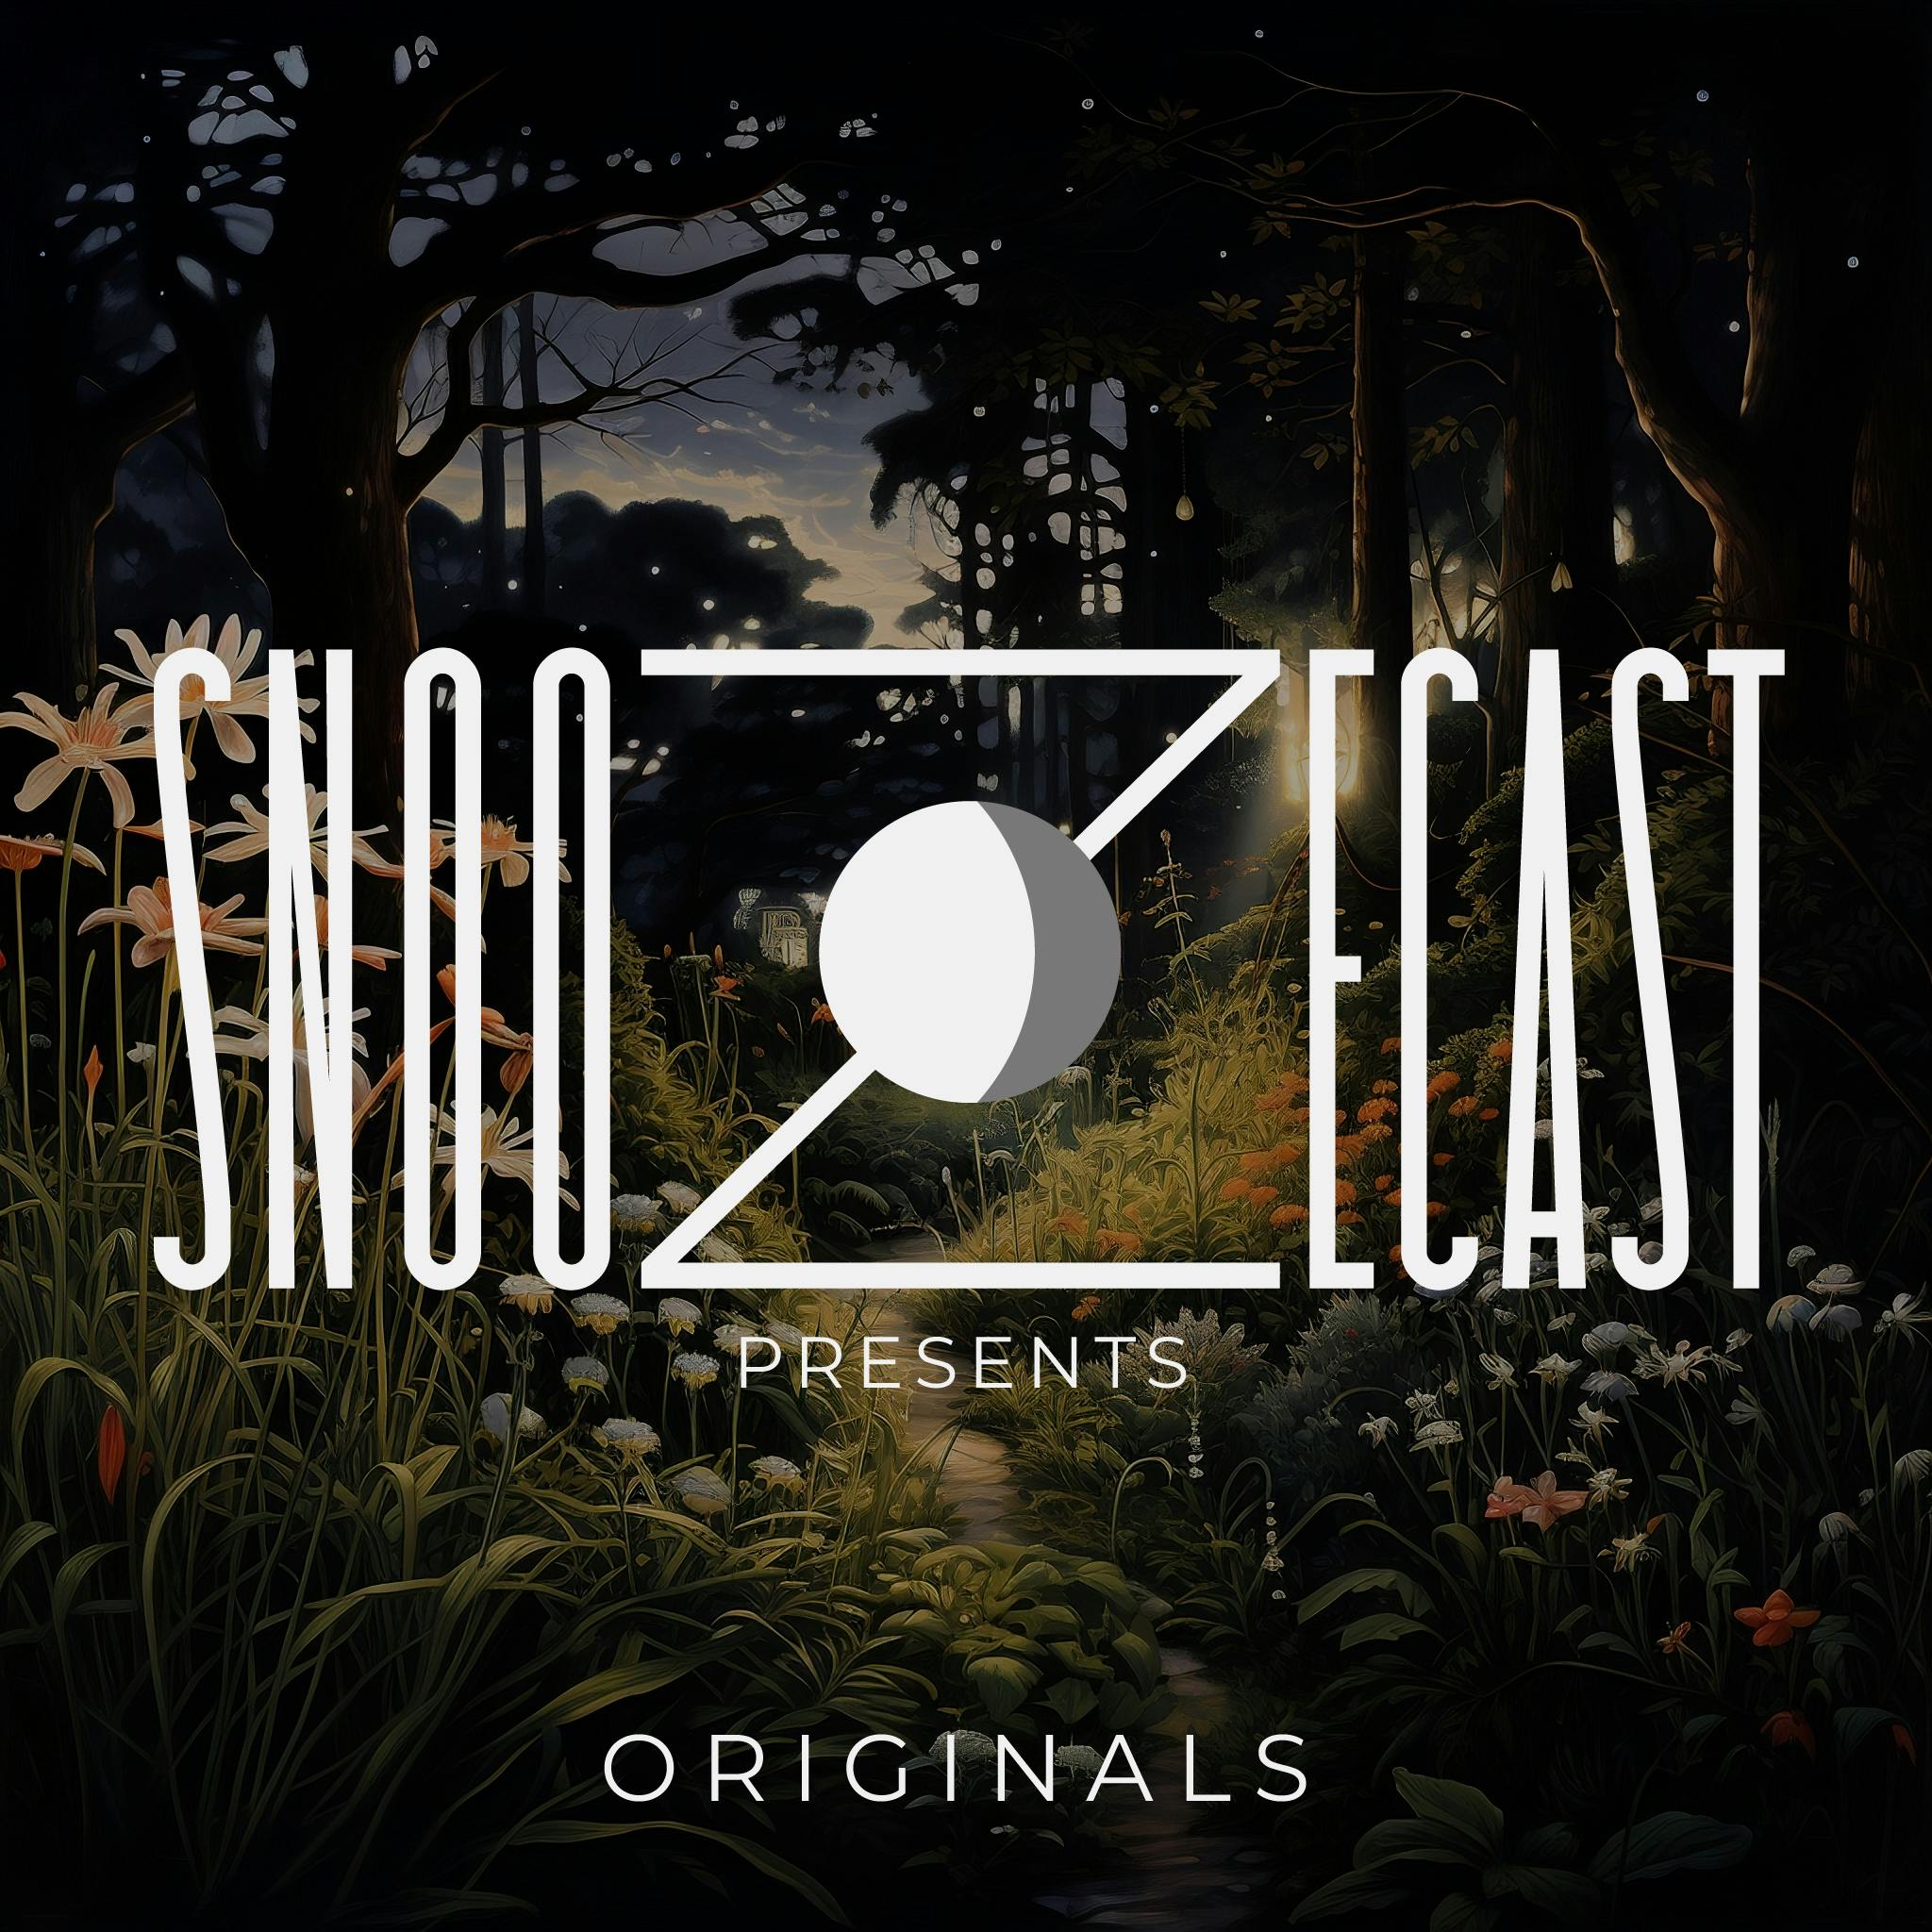 Snoozecast+ Deluxe: Originals podcast tile